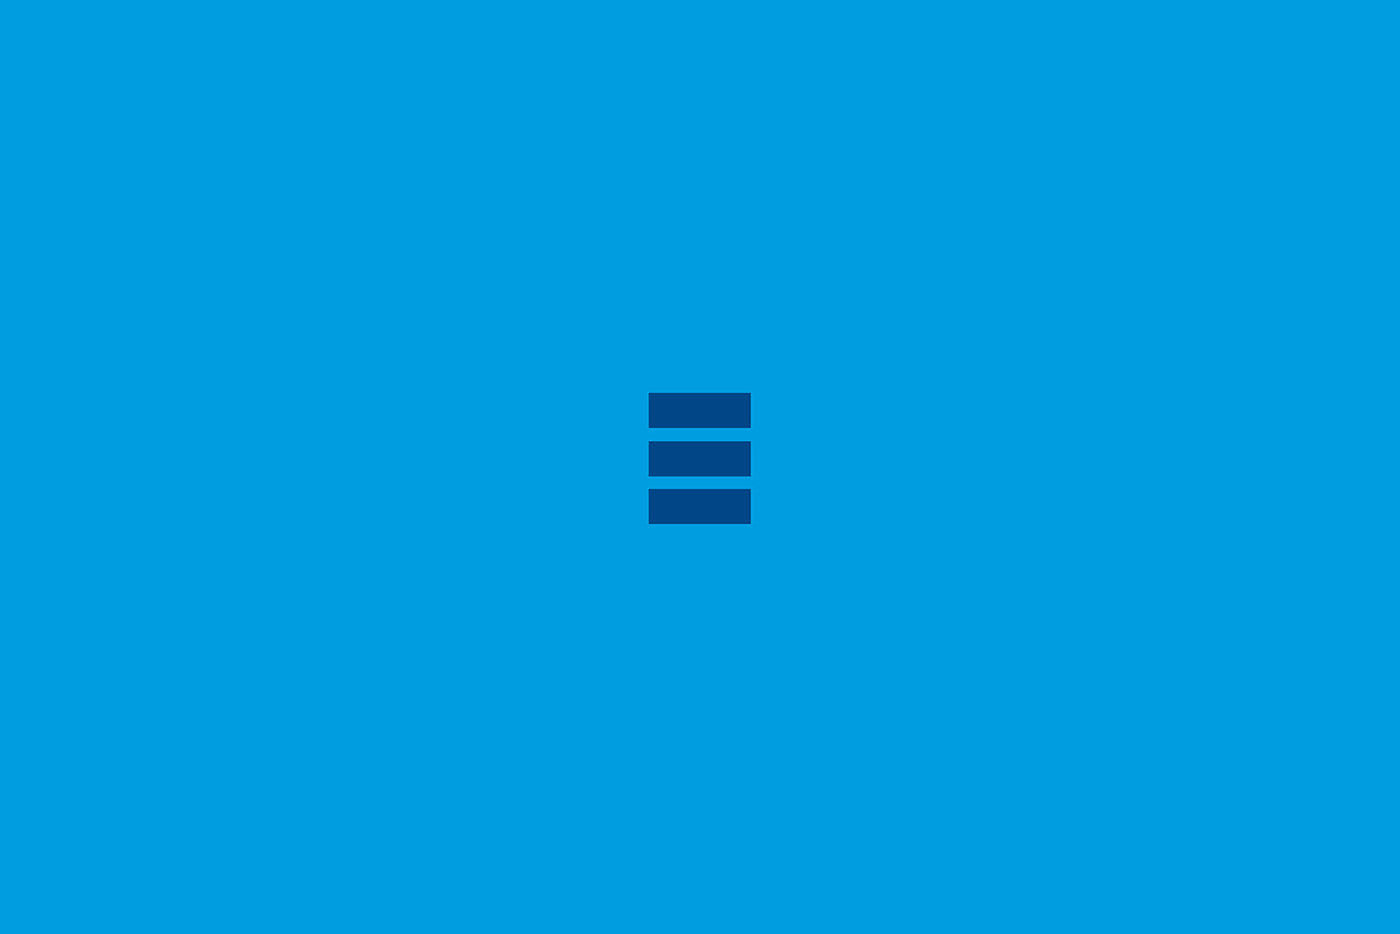 auditiva david espinosa colombia Sonido blue logo Web Icon identity identidad